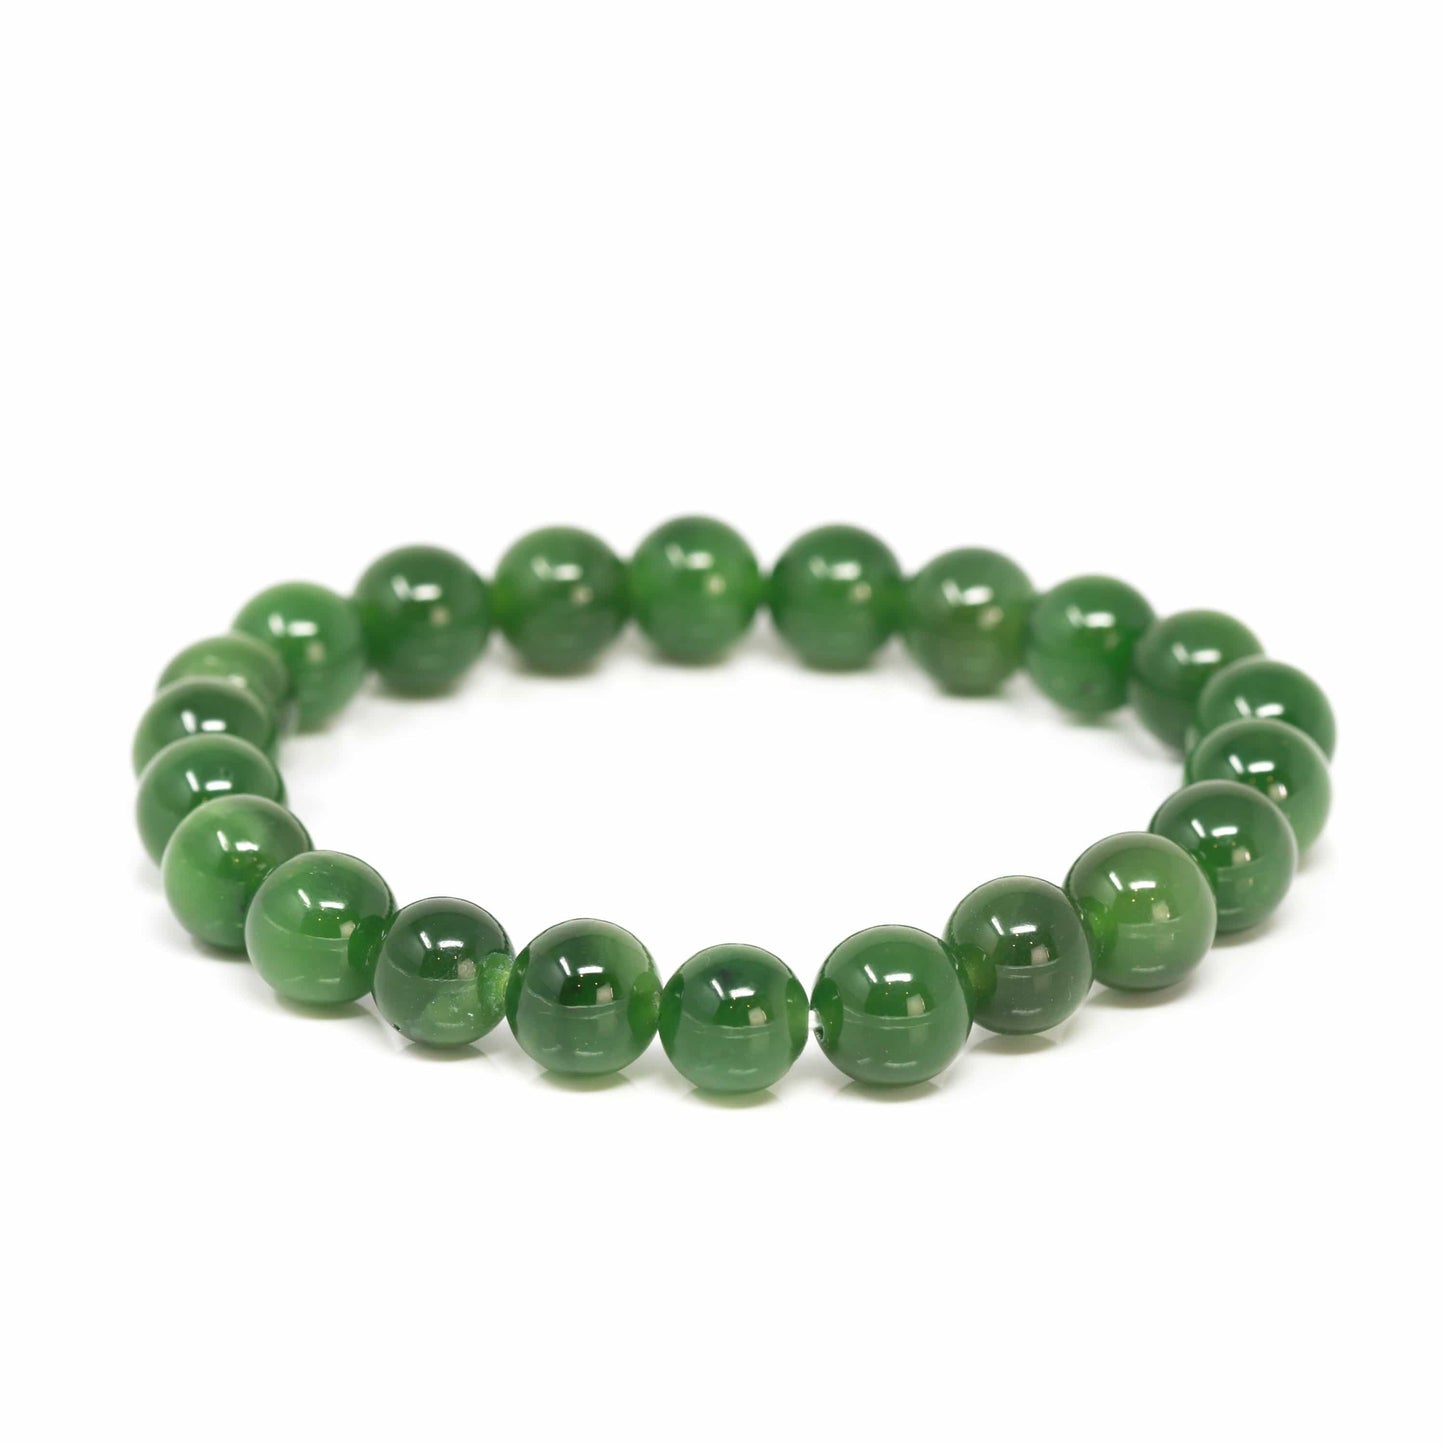 RealJade™ "Classic Bangle" Genuine Burmese High Quality Apple Green Jadeite Jade Bangle Bracelet (53.4mm) #539